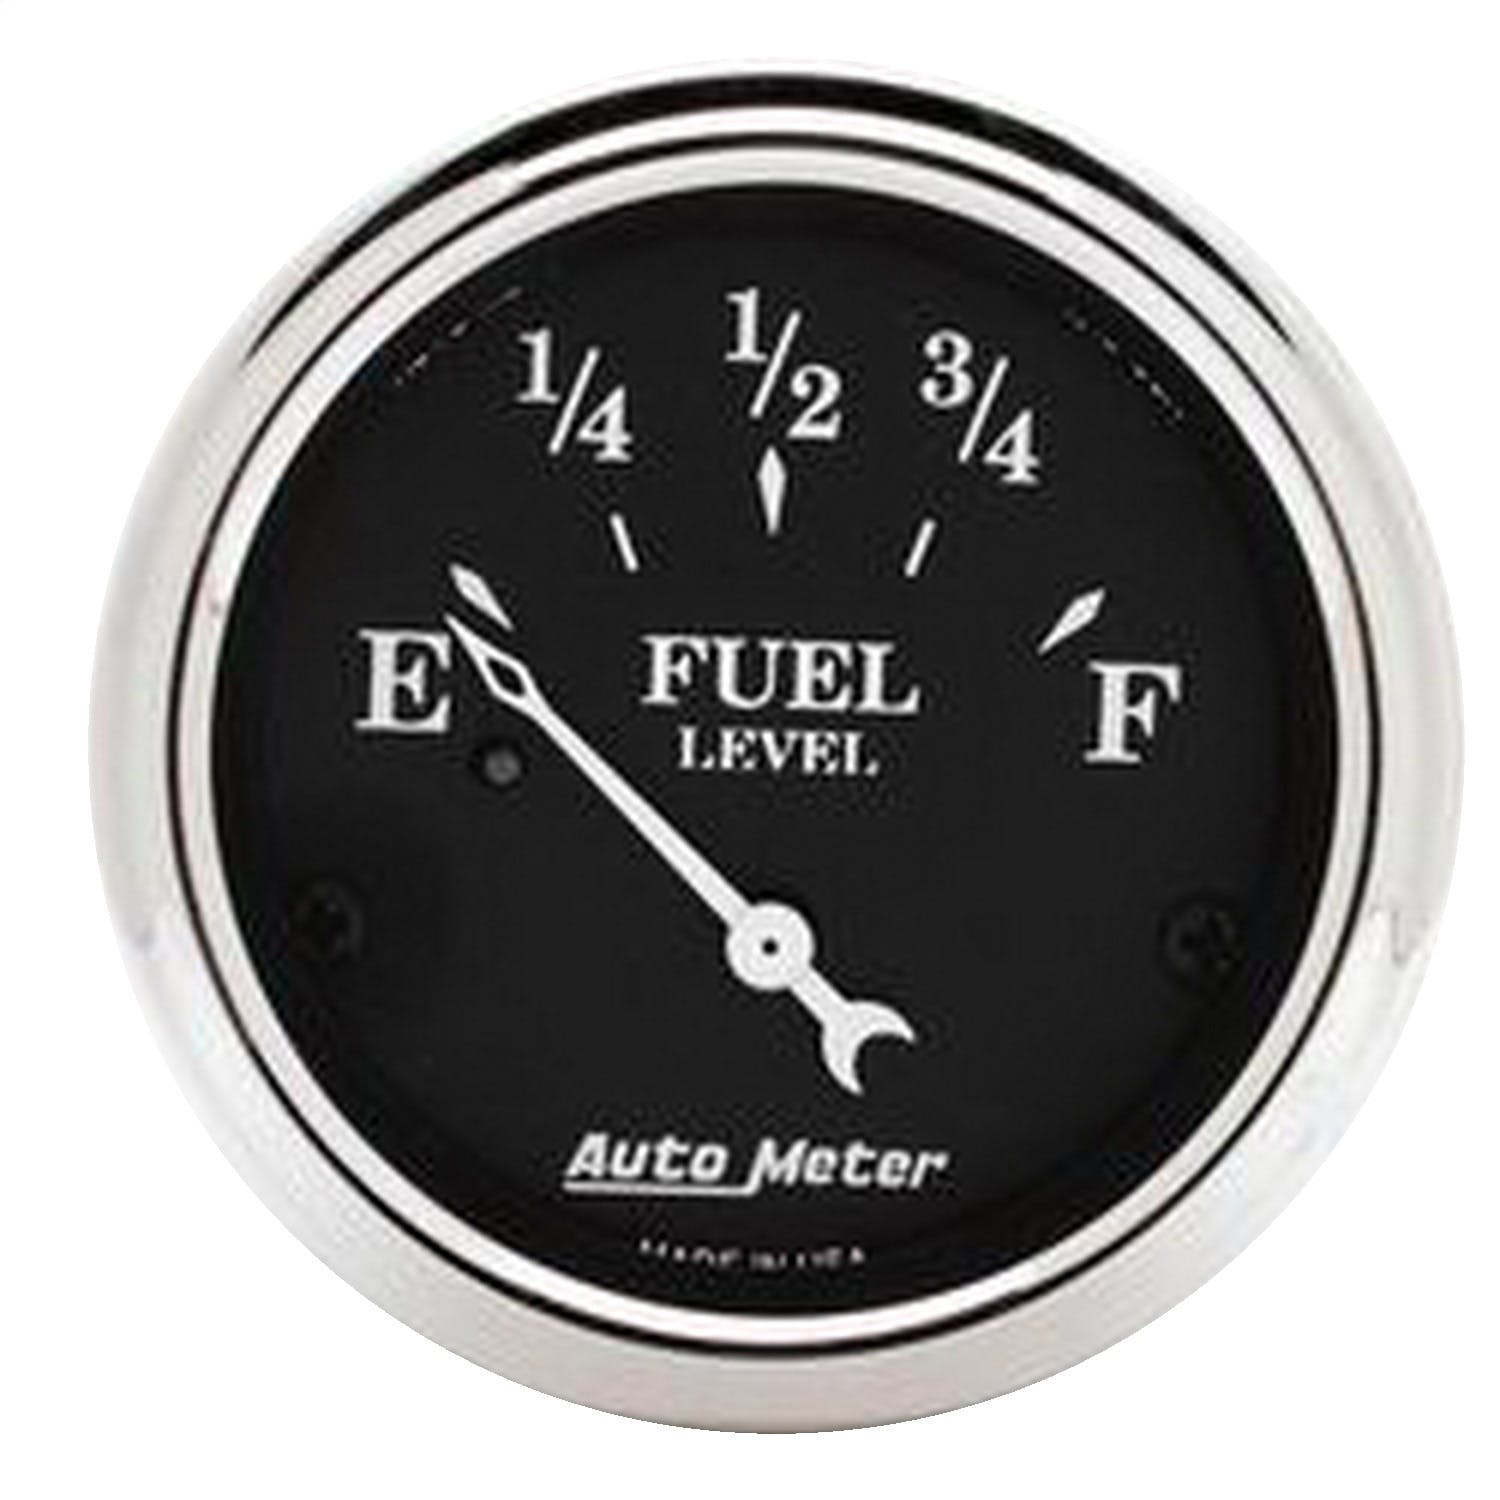 AutoMeter Products 1716 Fuel Level Gauge